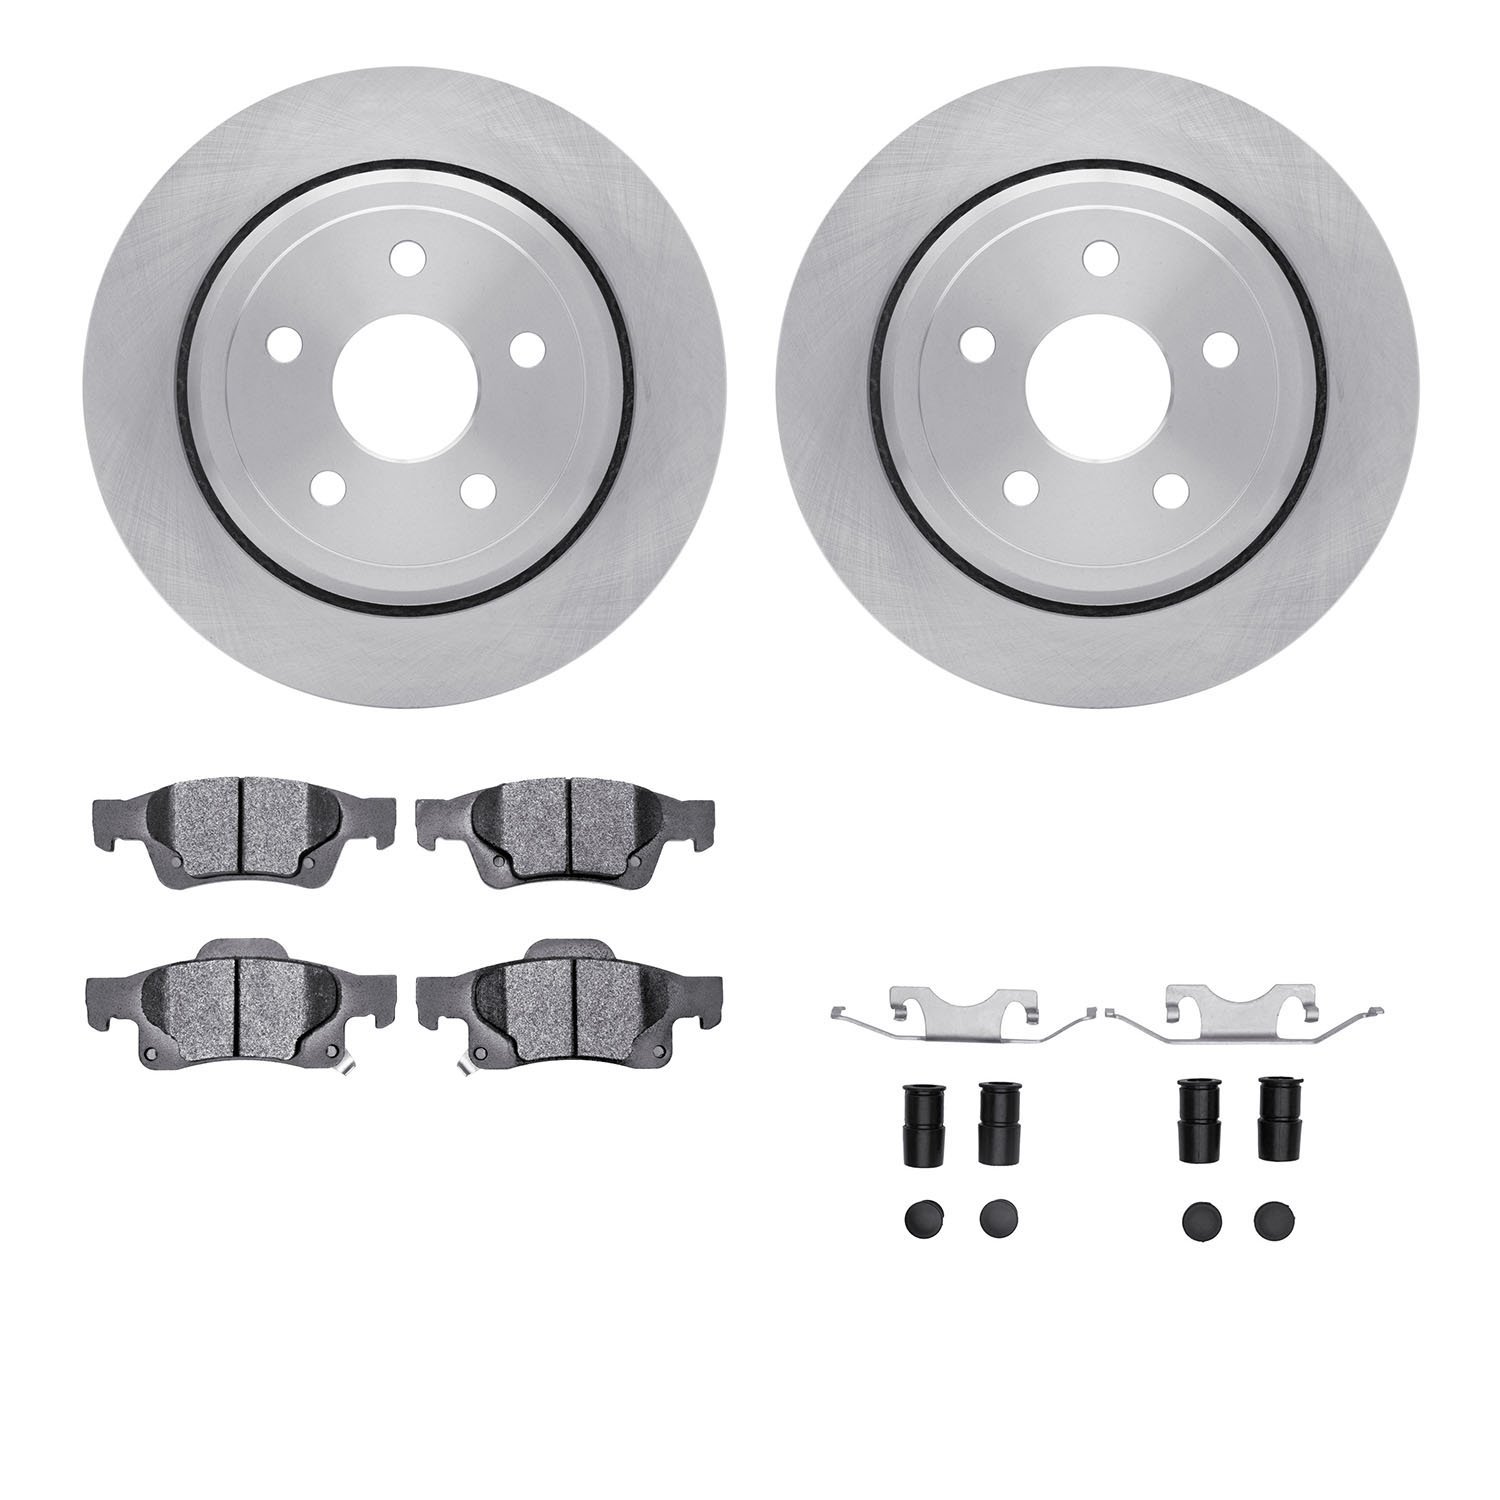 6412-42019 Brake Rotors with Ultimate-Duty Brake Pads Kit & Hardware, Fits Select Mopar, Position: Rear